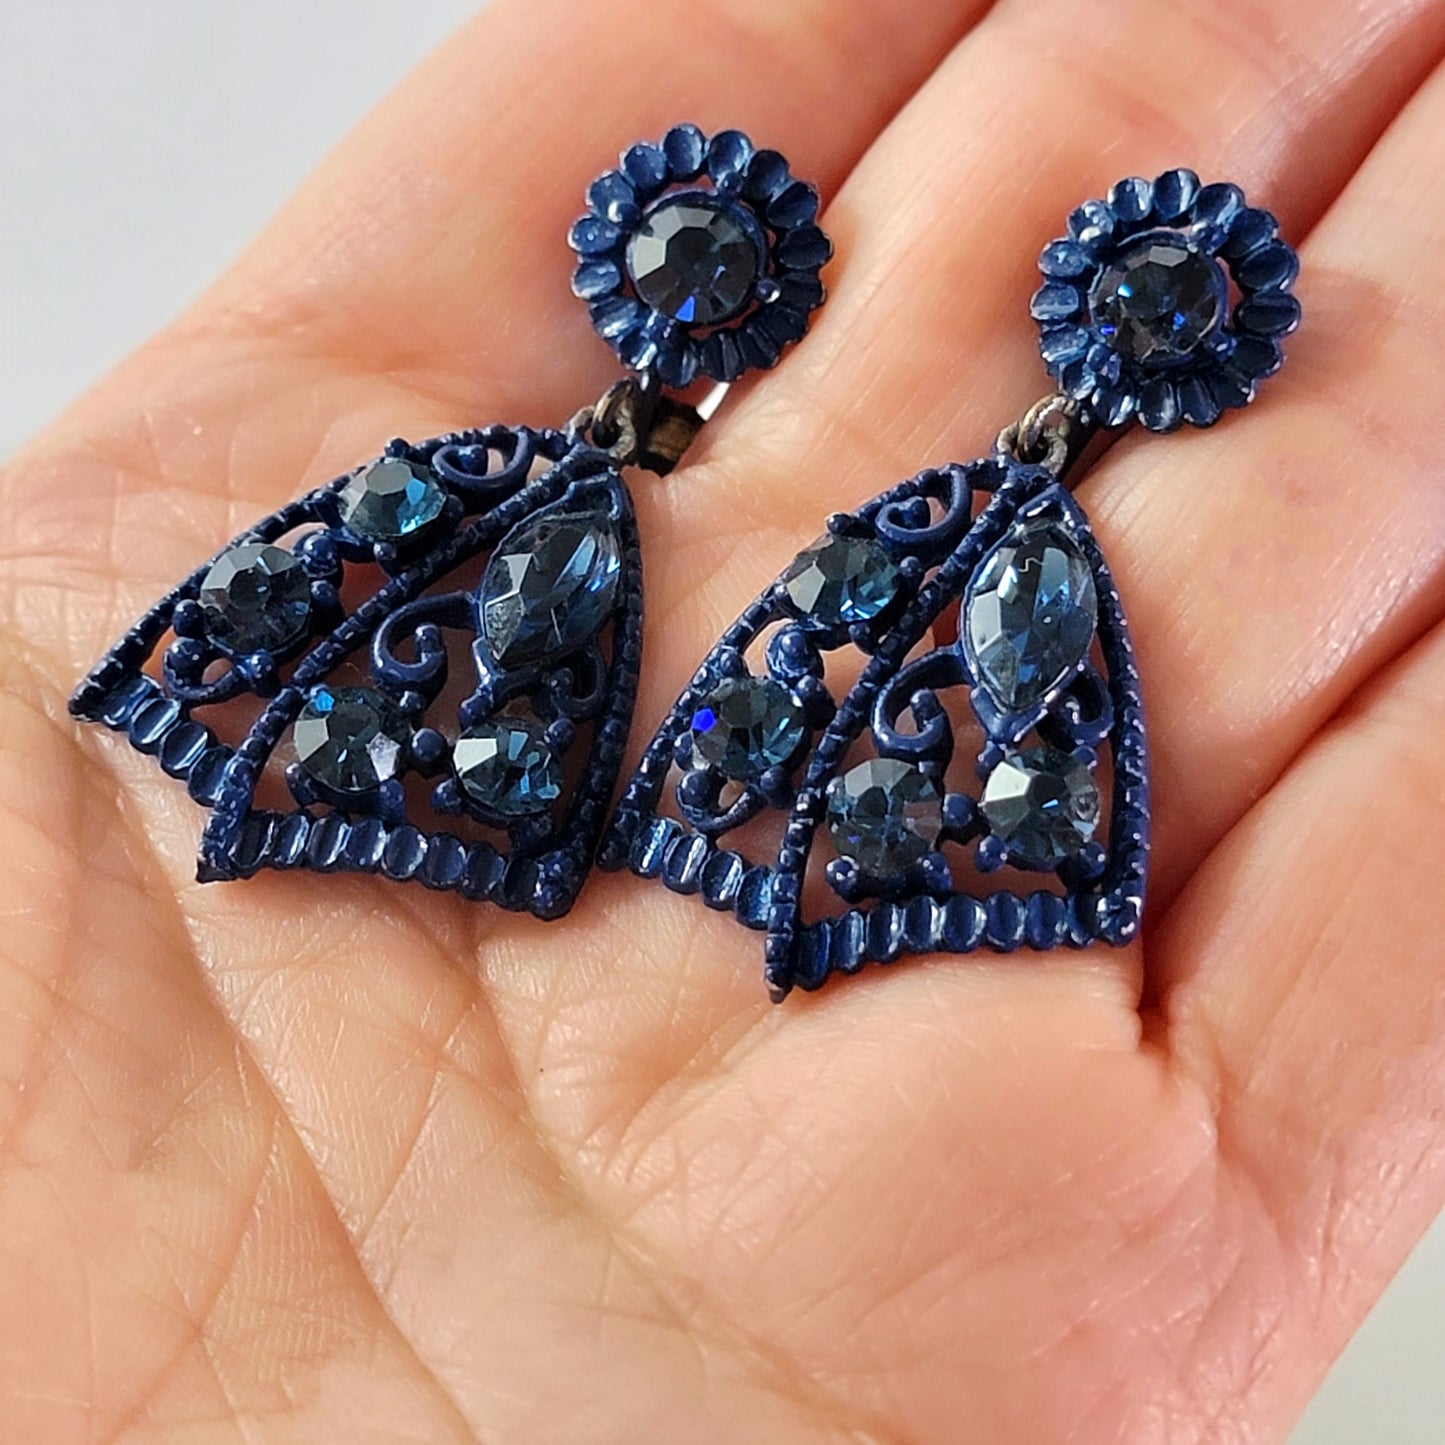 Blue rhinestone dangle earrings in hand.